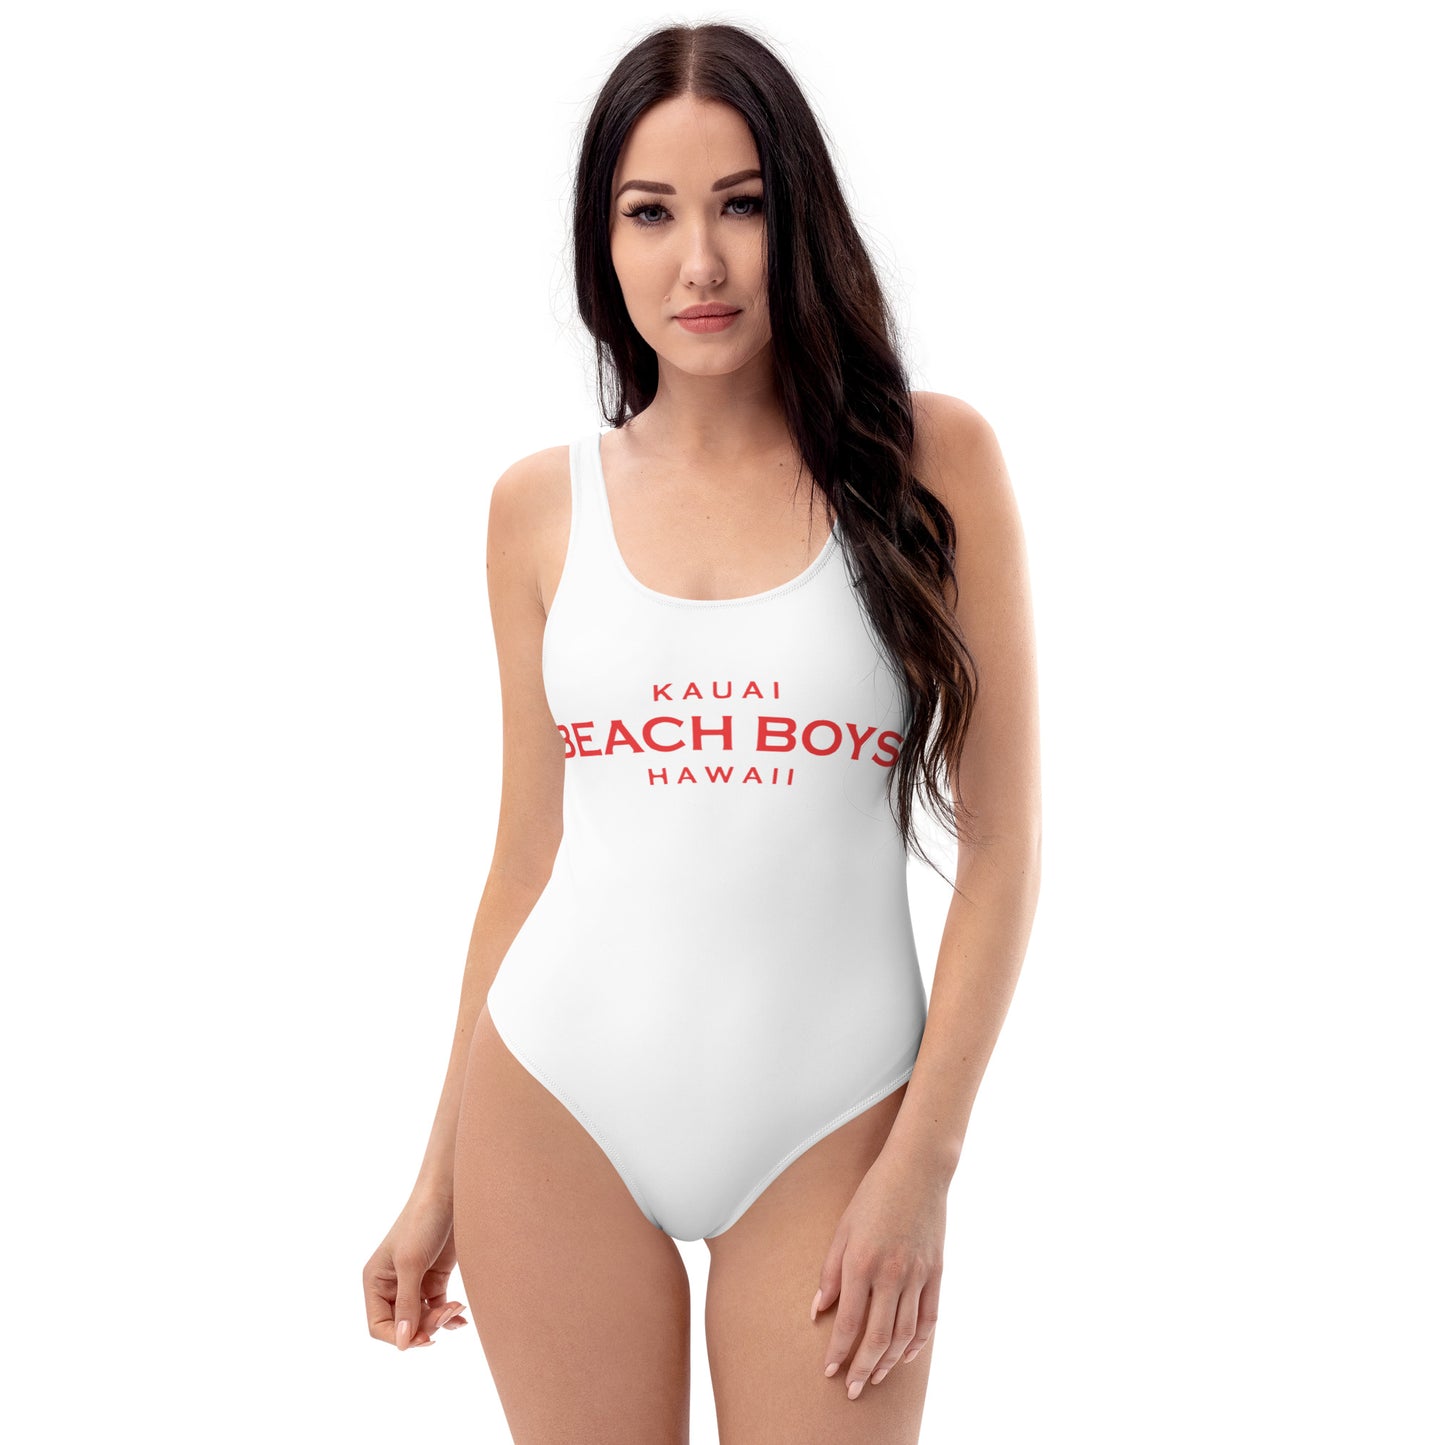 KBB One-Piece Swimsuit